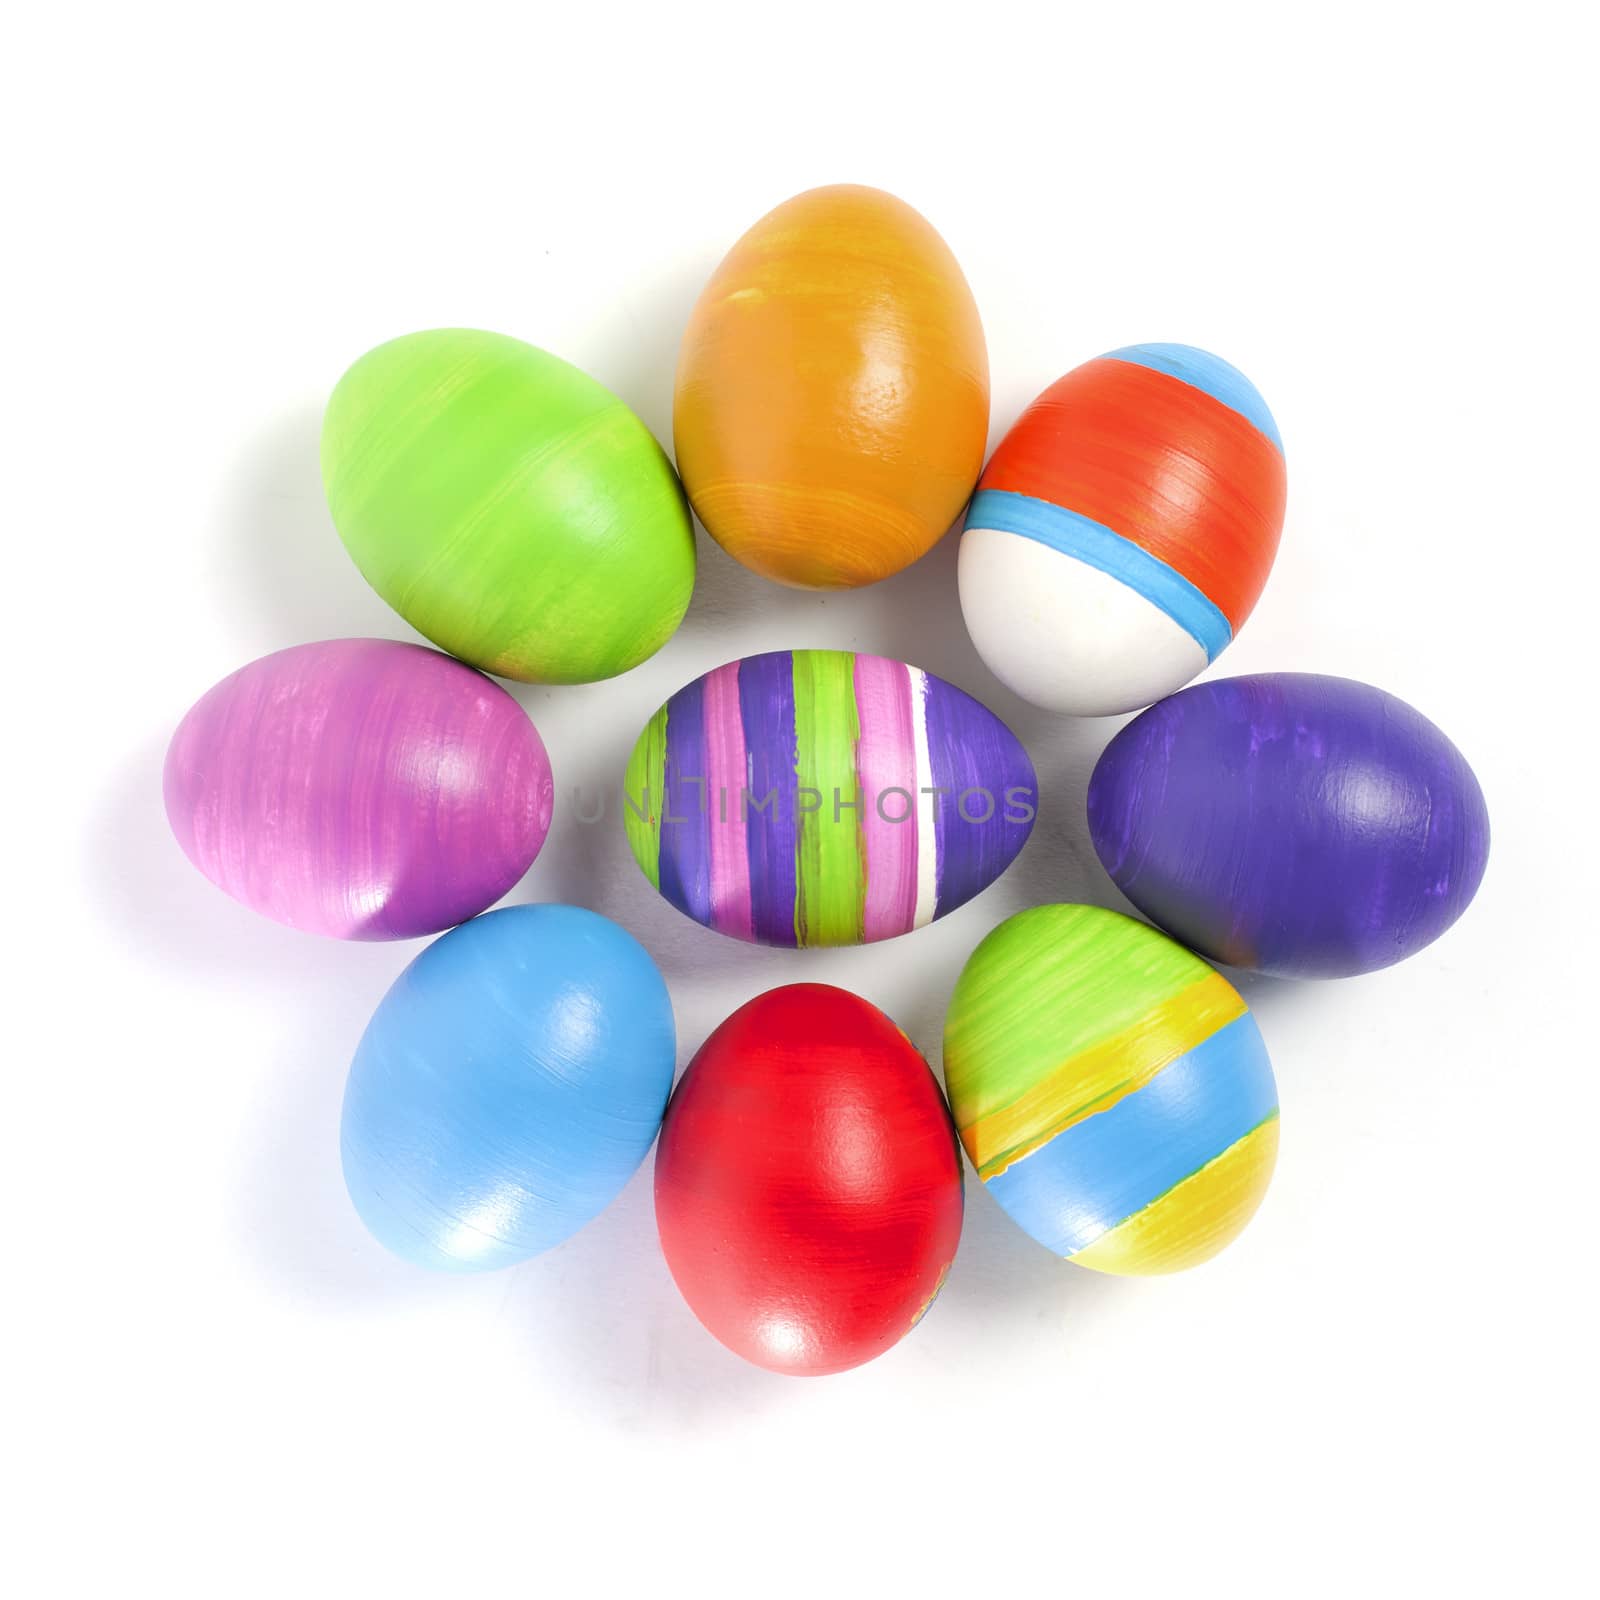 Coloured easter eggs by Kor